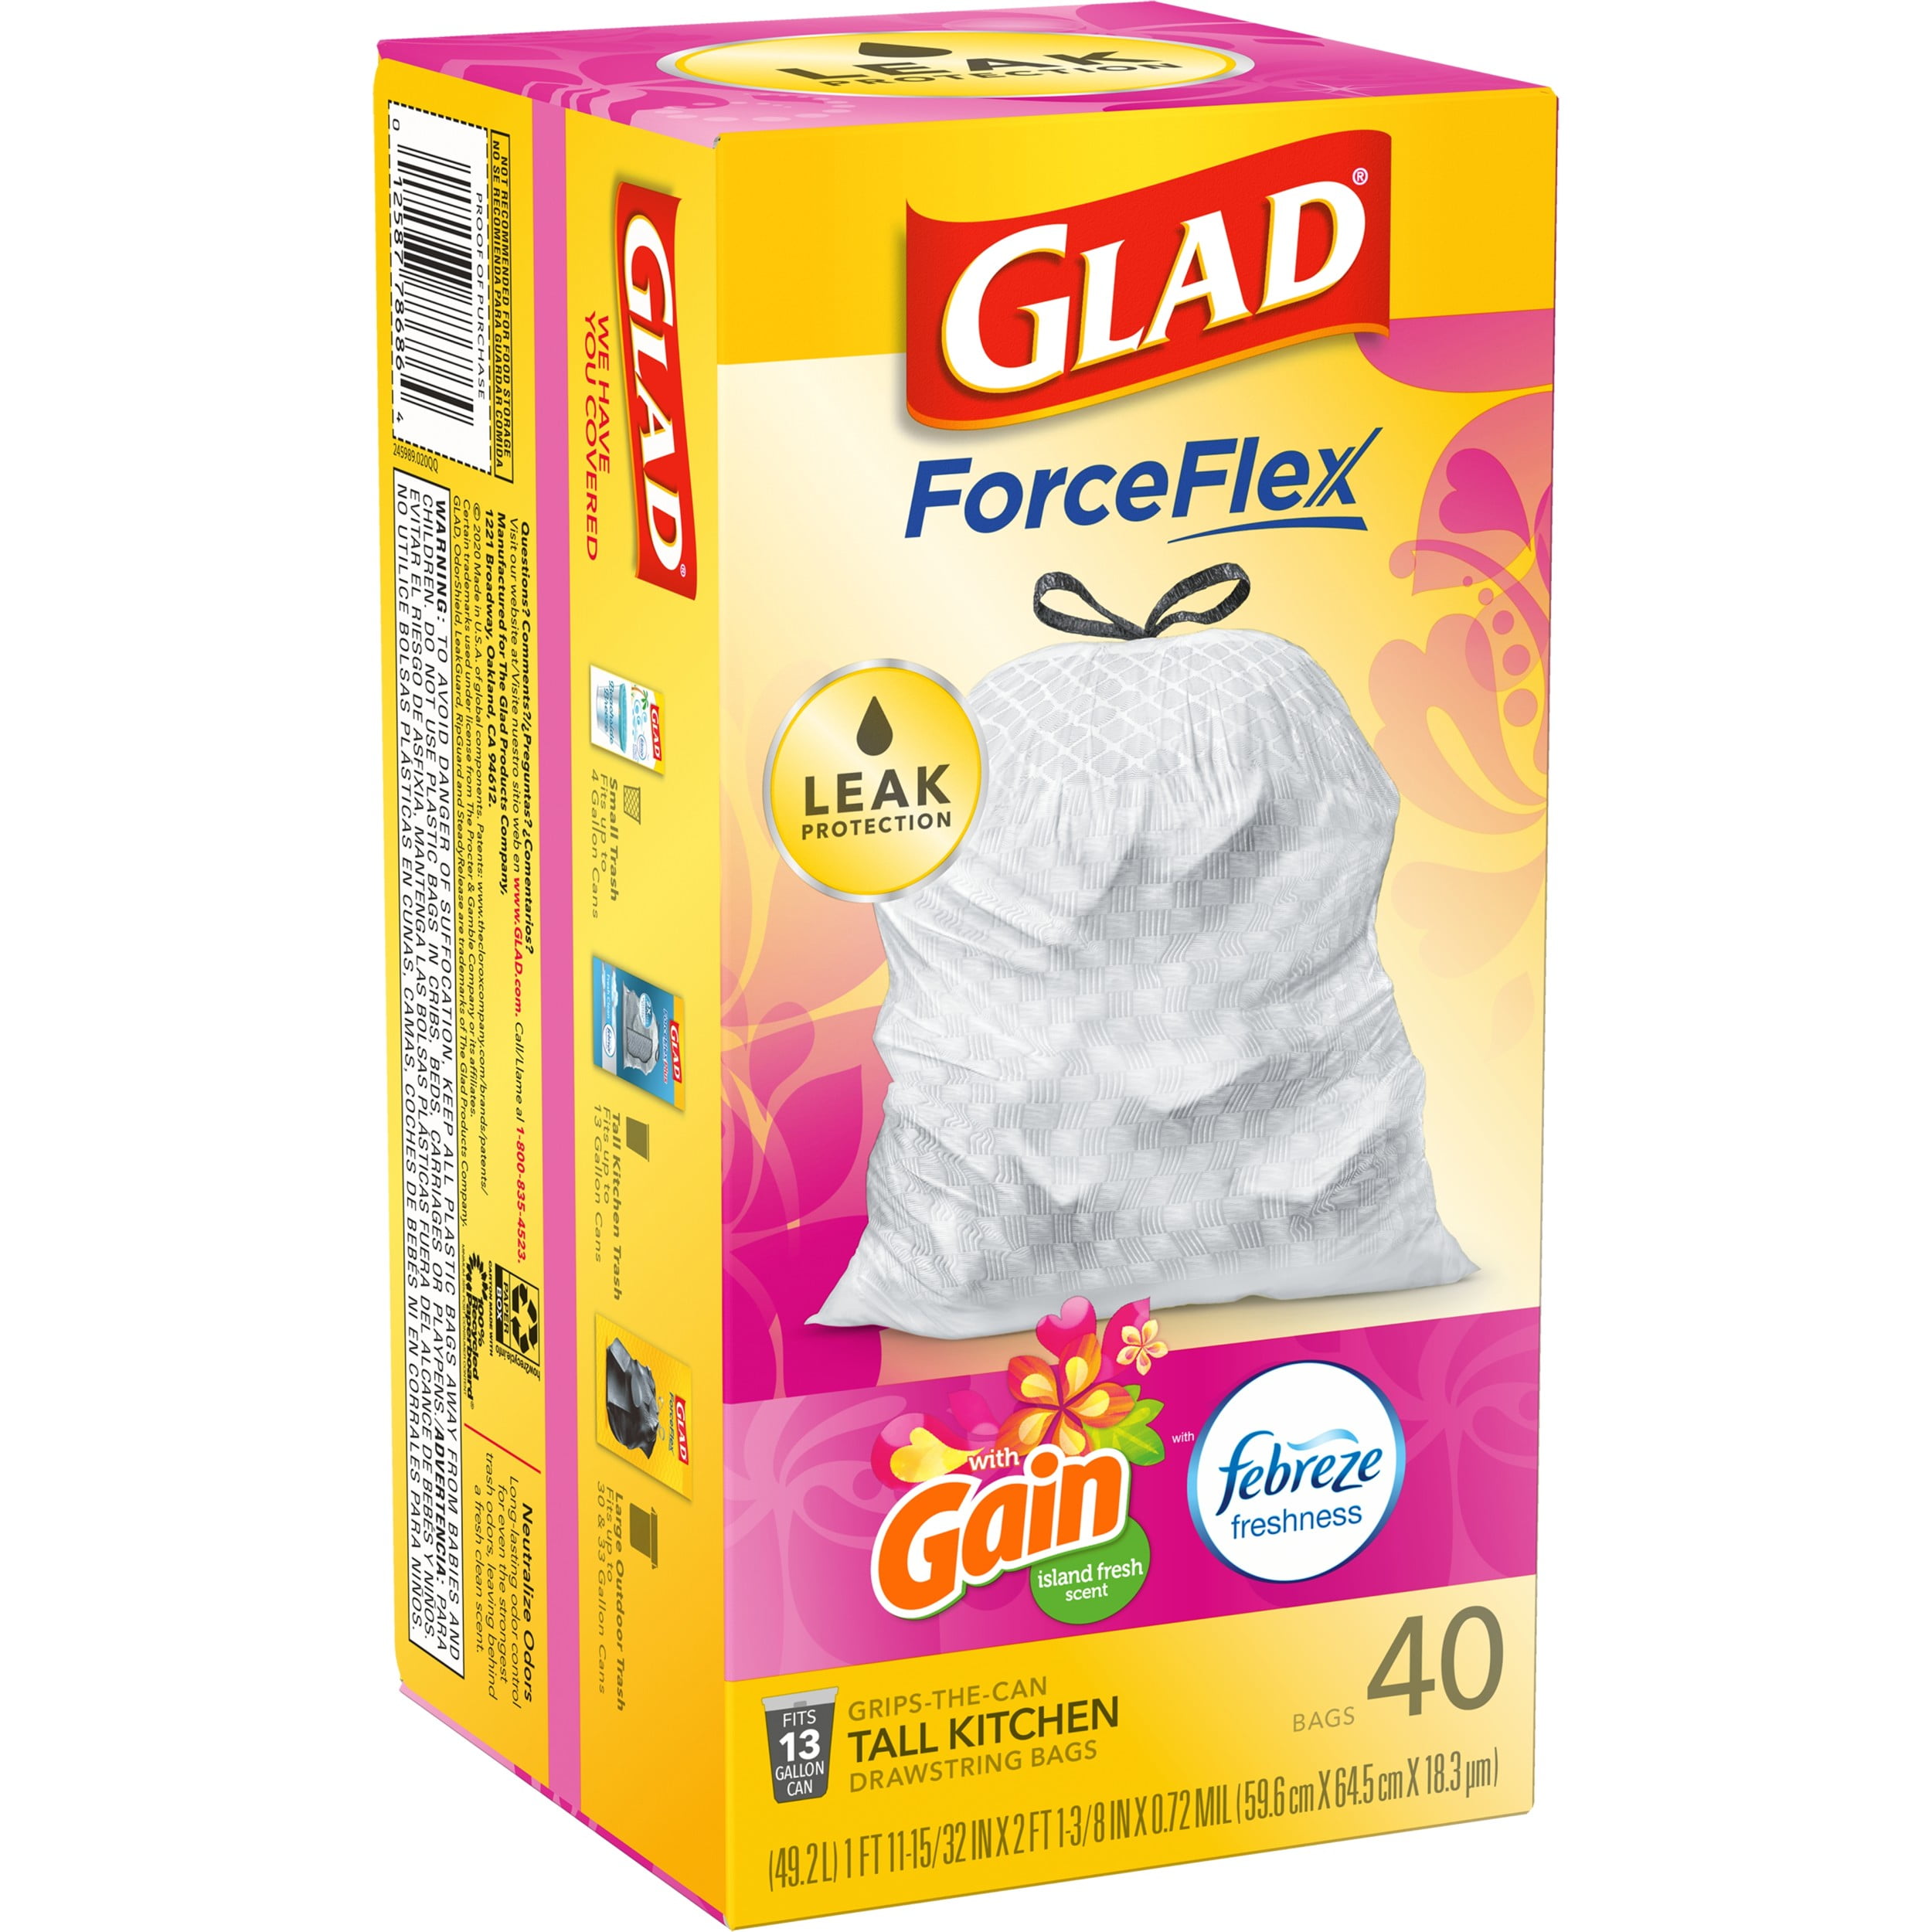 Glad ForceFlex with Febreze Gain Original Scent Tall Kitchen Drawstring  Trash Bags, 40 ct - Pick 'n Save